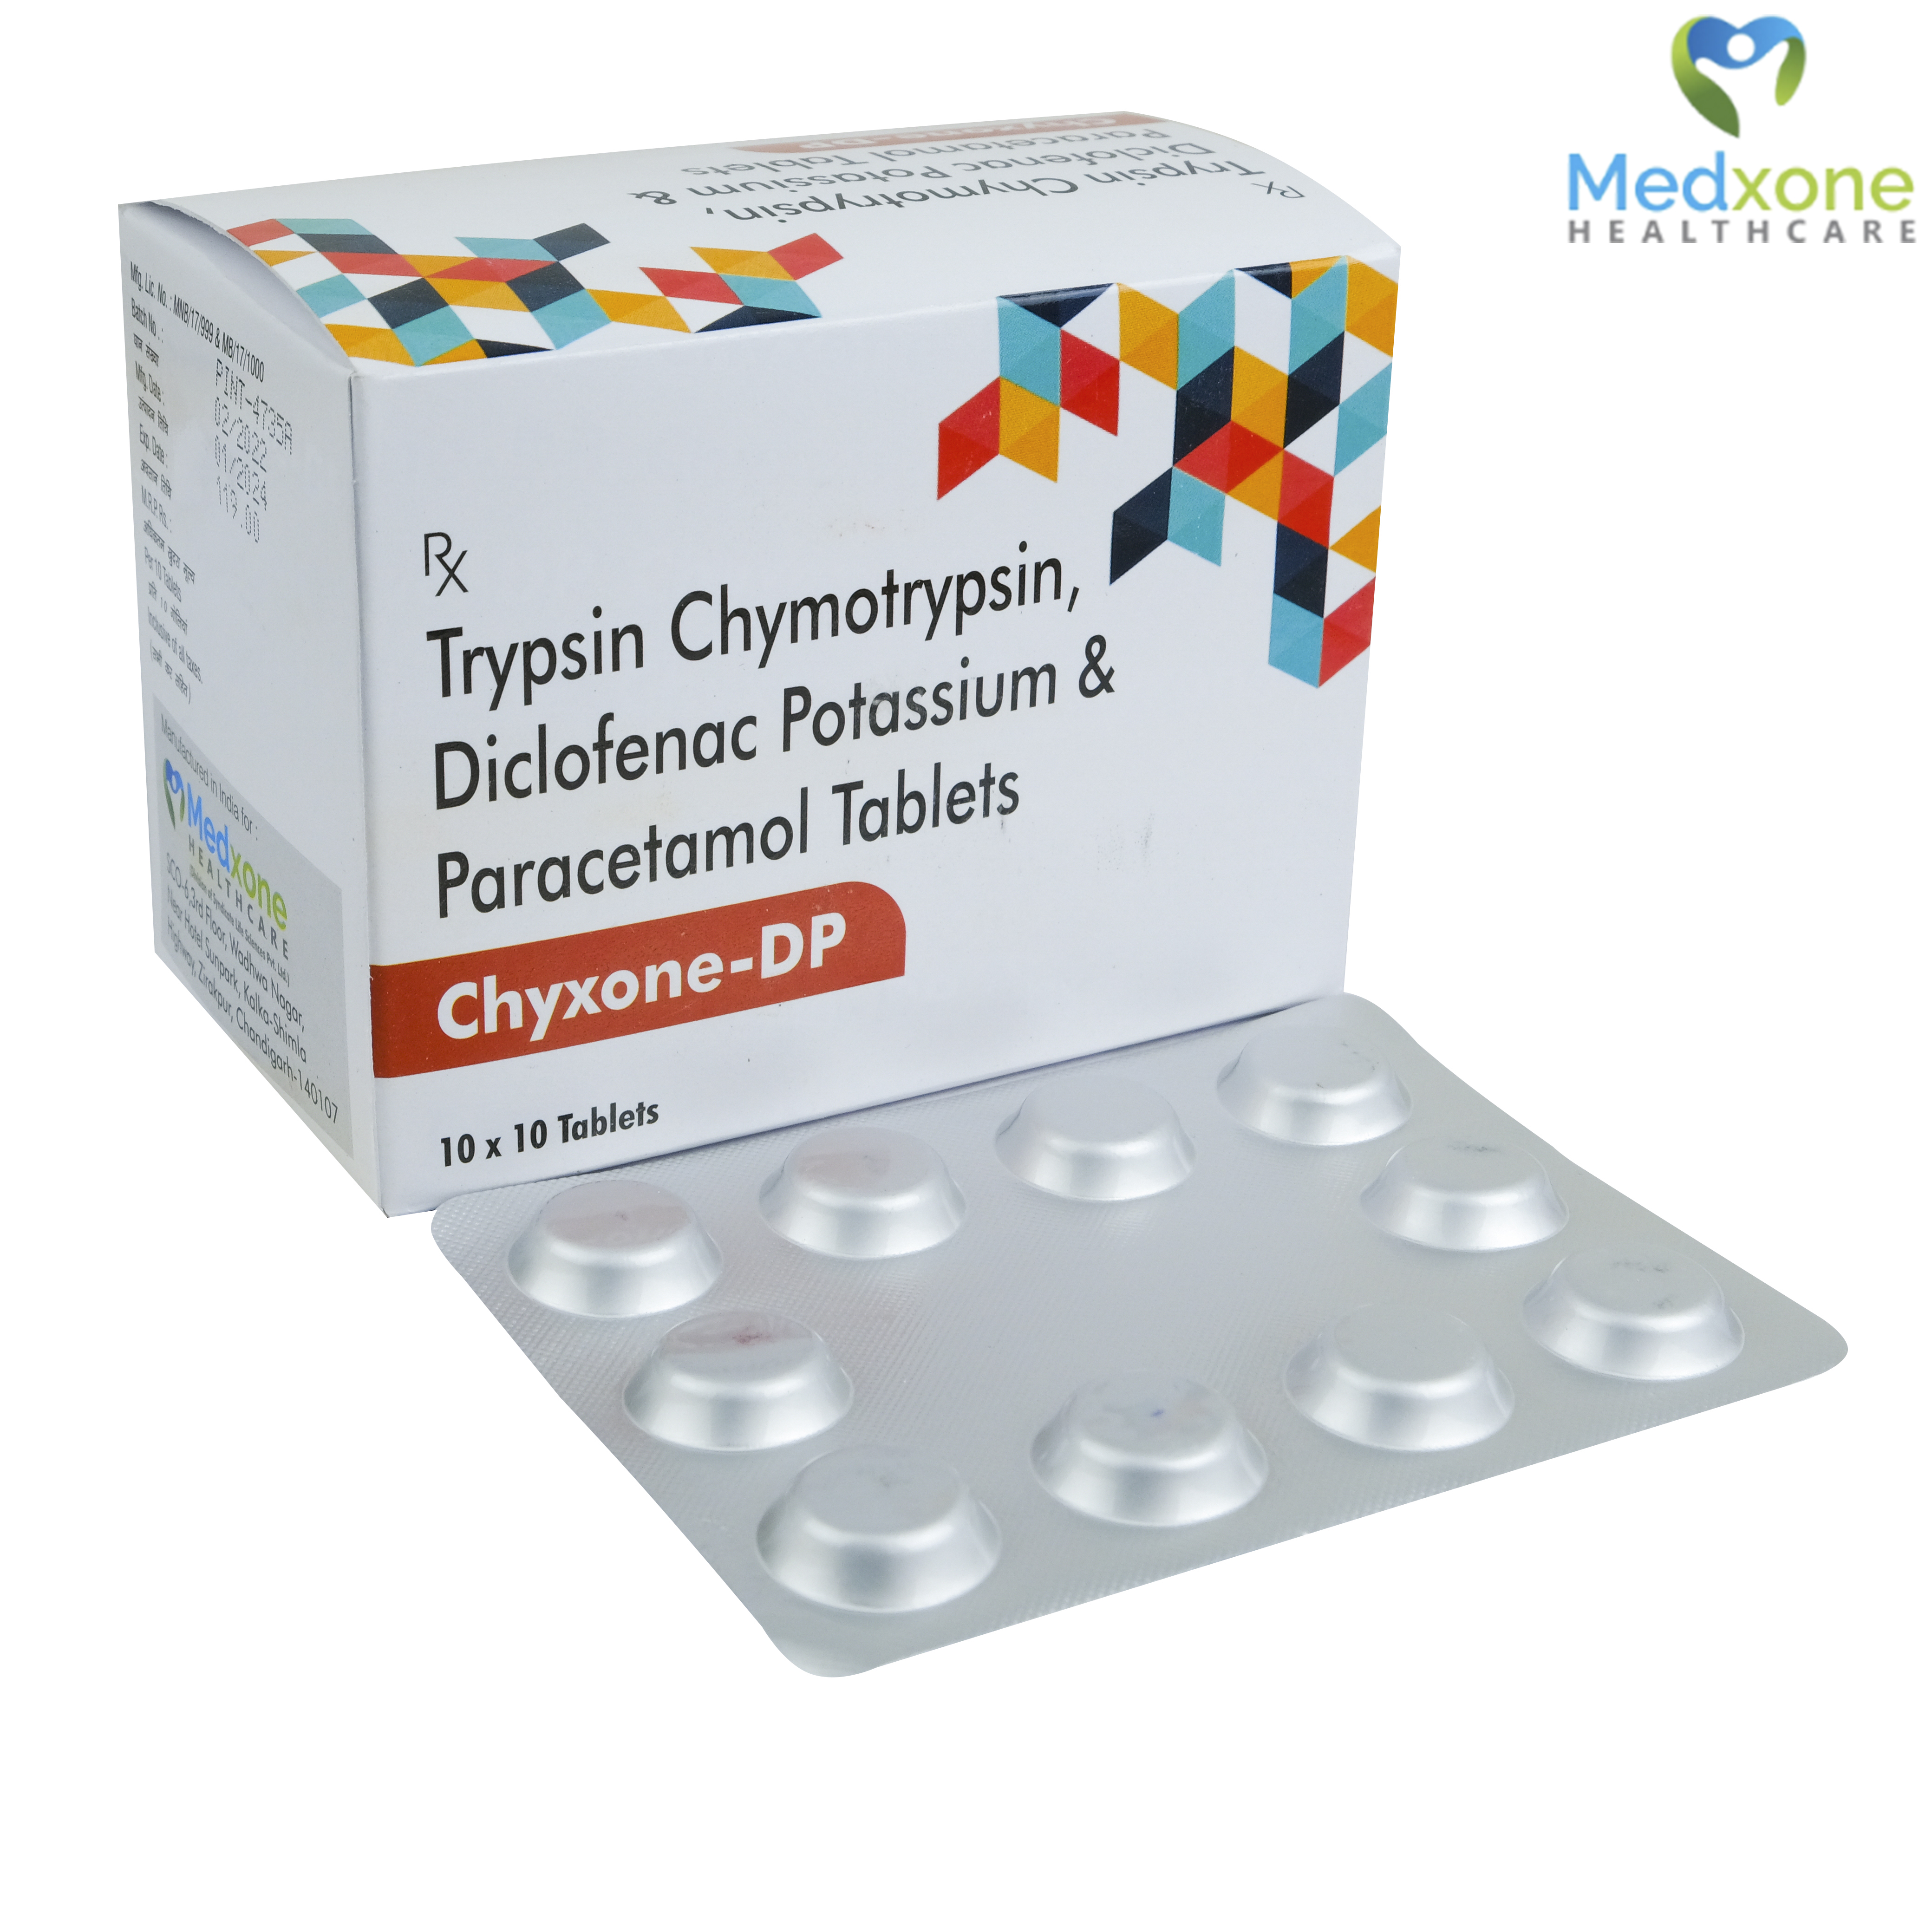 "Each Film coated tablet contains: Trypsin Chymotrypsin 5000AU + Diclofenac Potassium 50mg + Paracetamol 325mg"